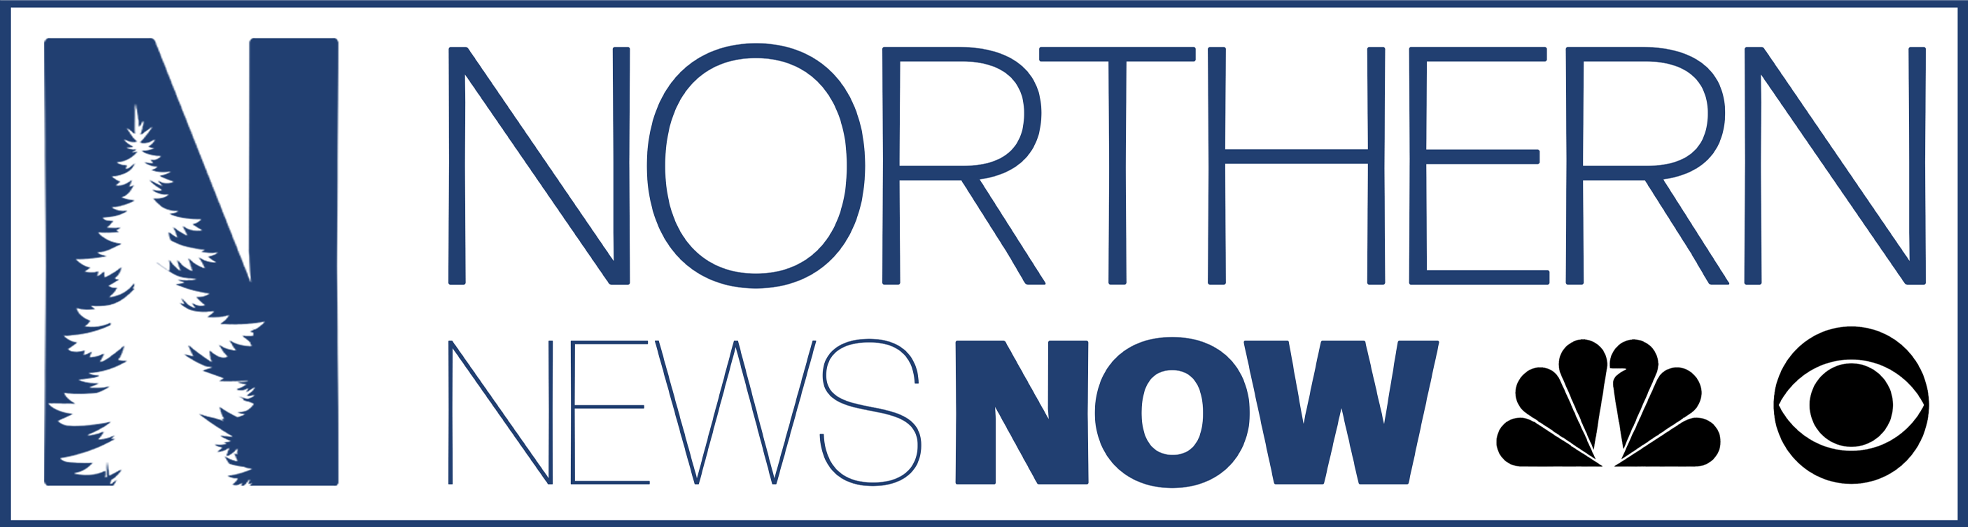 BWBT_Northern News Now